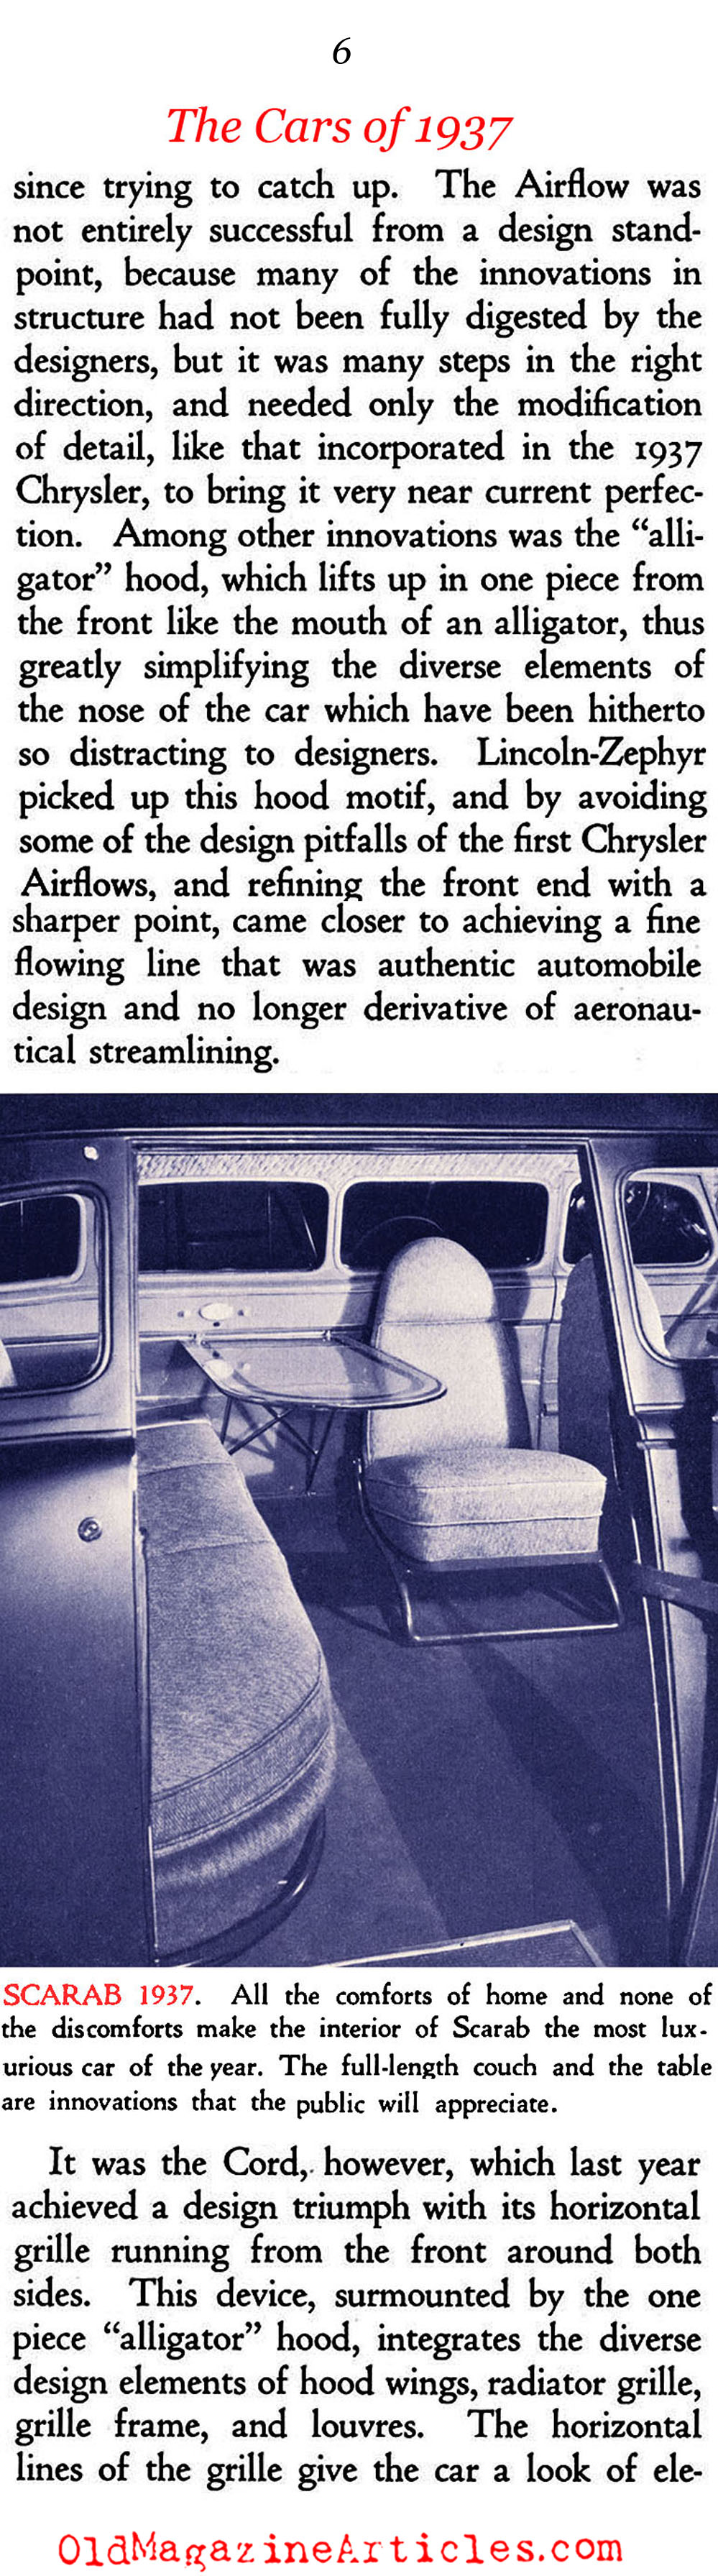 The Streamlining of Cars (Creative Art Magazine, 1936)